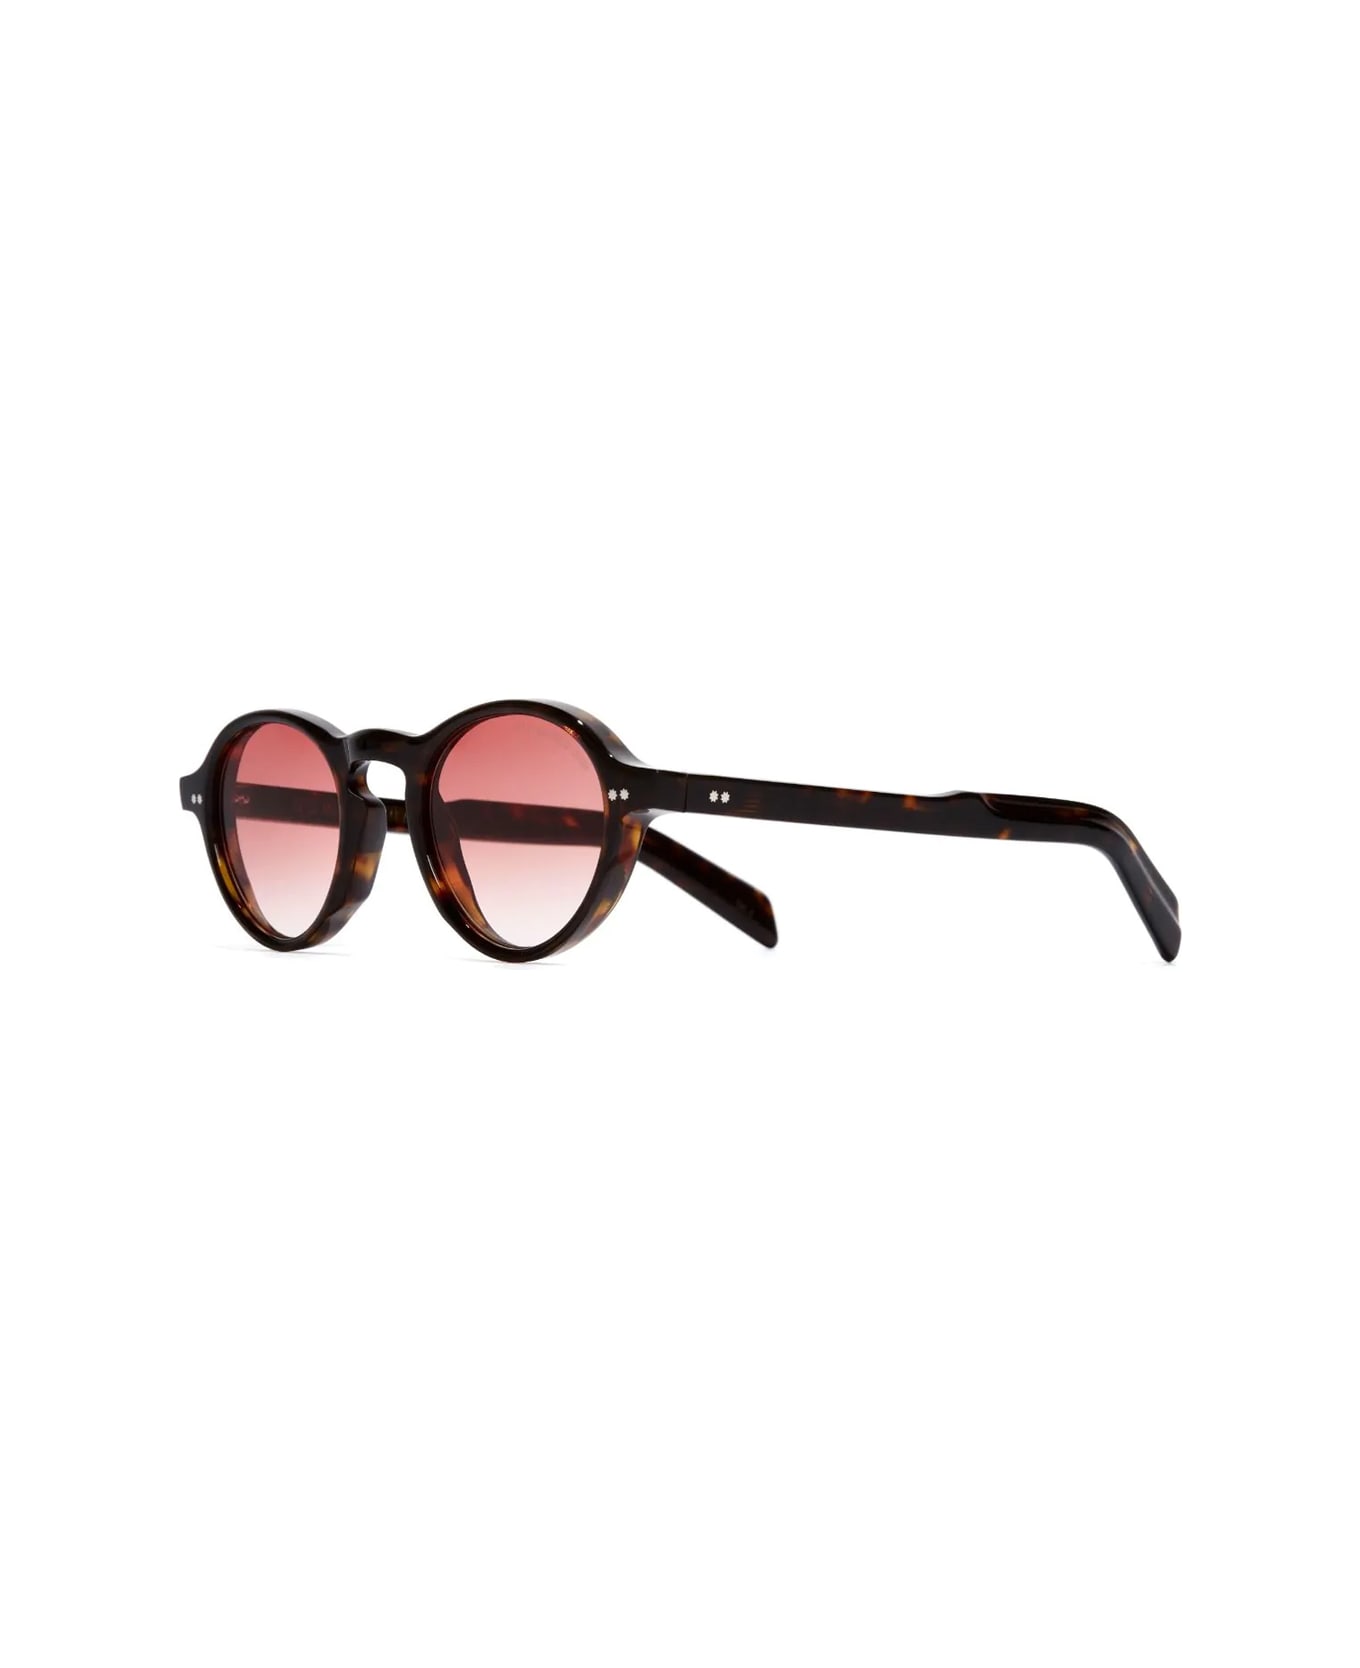 Cutler and Gross Gr08 03 Havana Sunglasses - Marrone